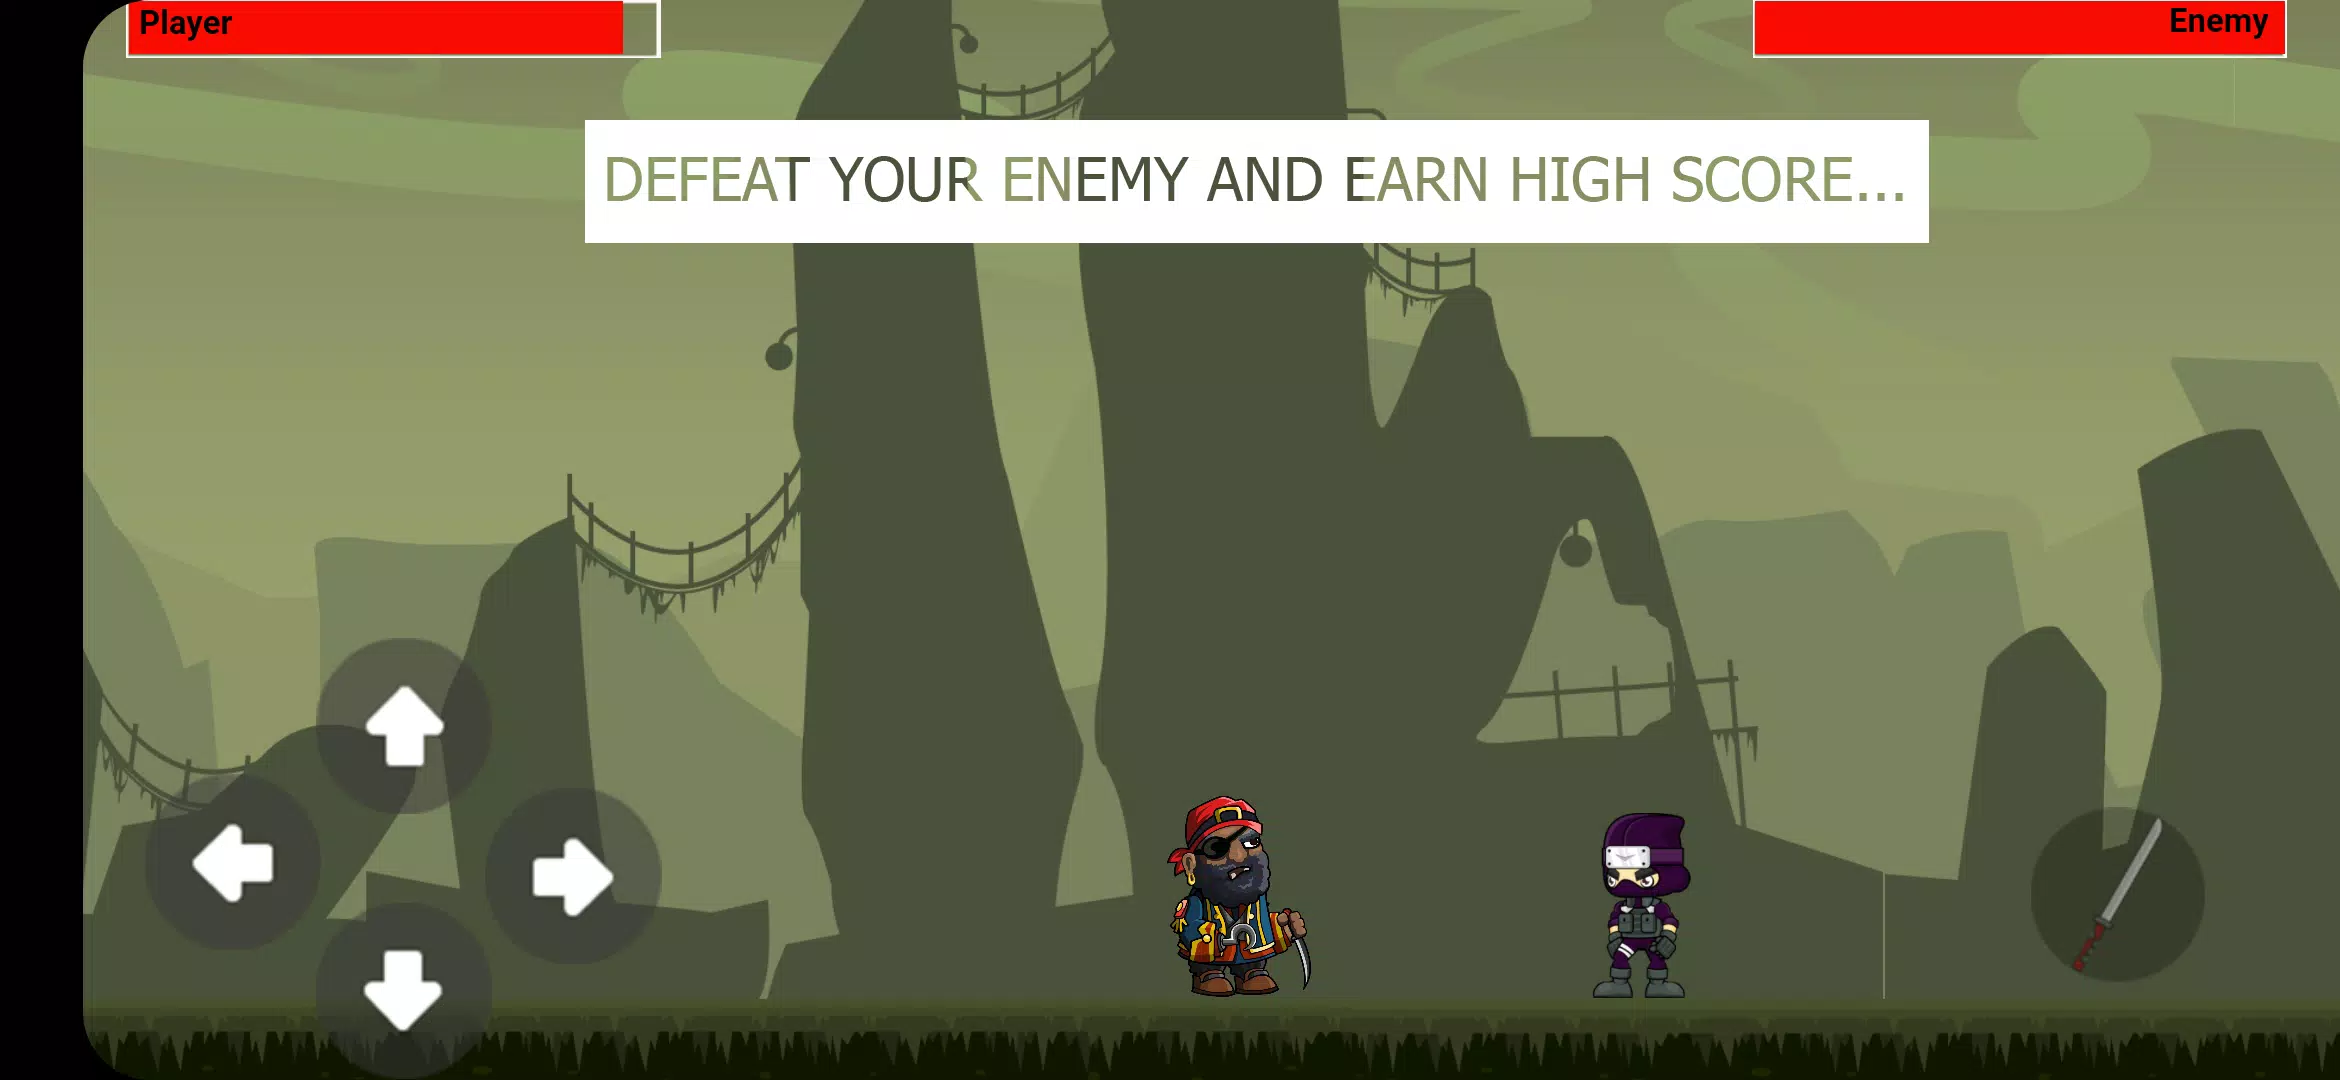 Ninja Shadow Endless Runner Game